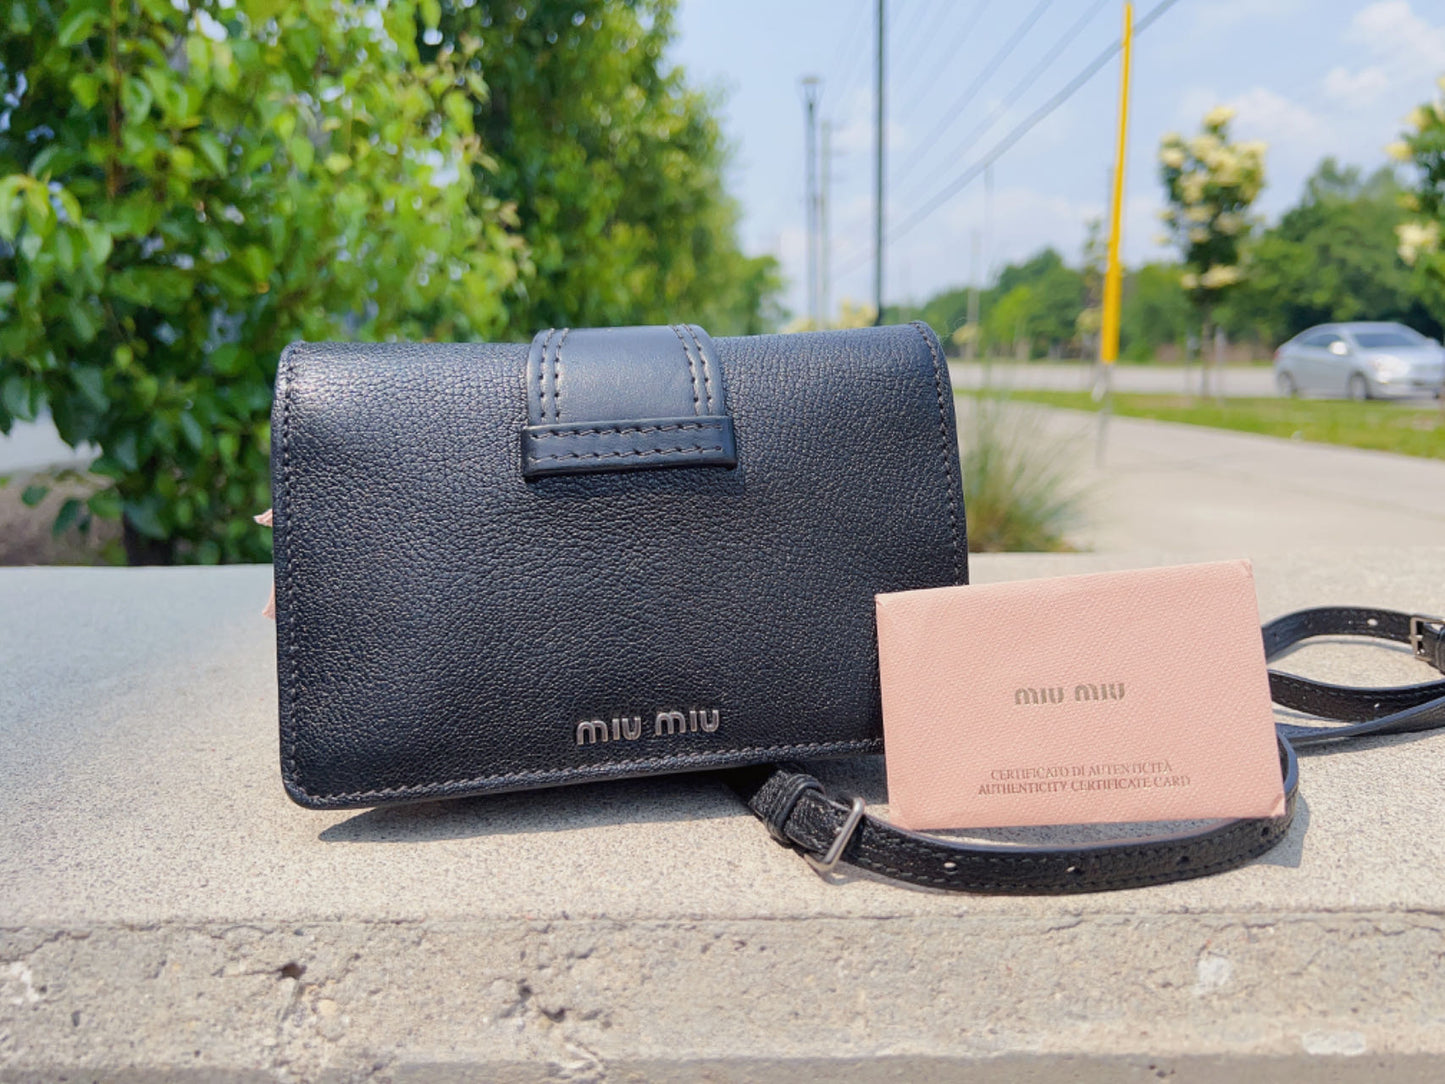 Miu Miu pebble-grain leather clutch bag